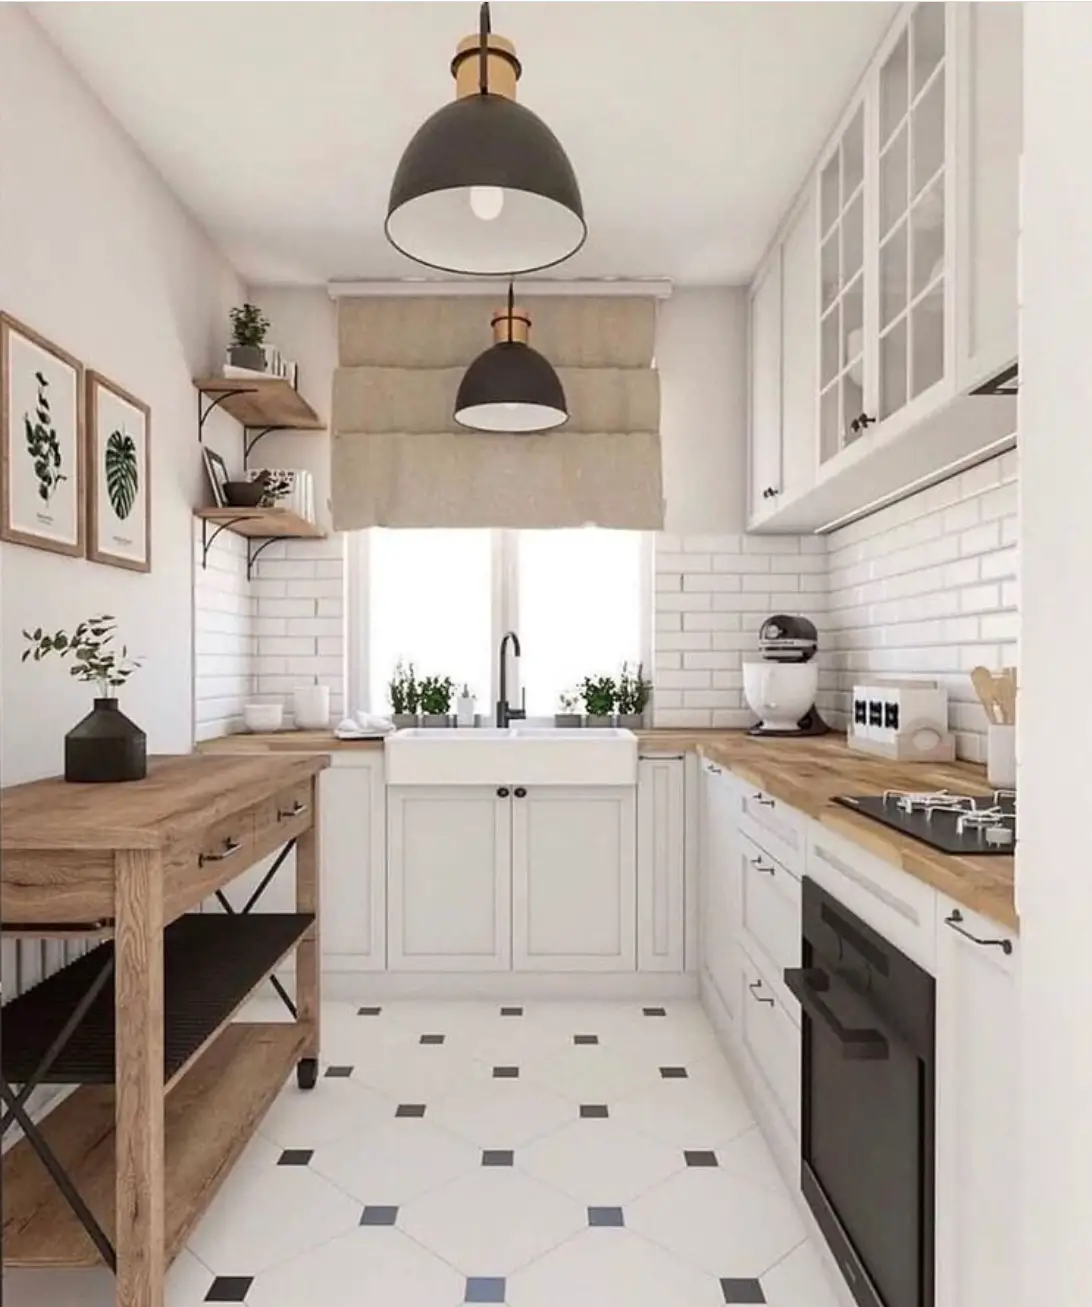 20+ Beautiful Rustic Kitchen Decor Ideas   The Wonder Cottage